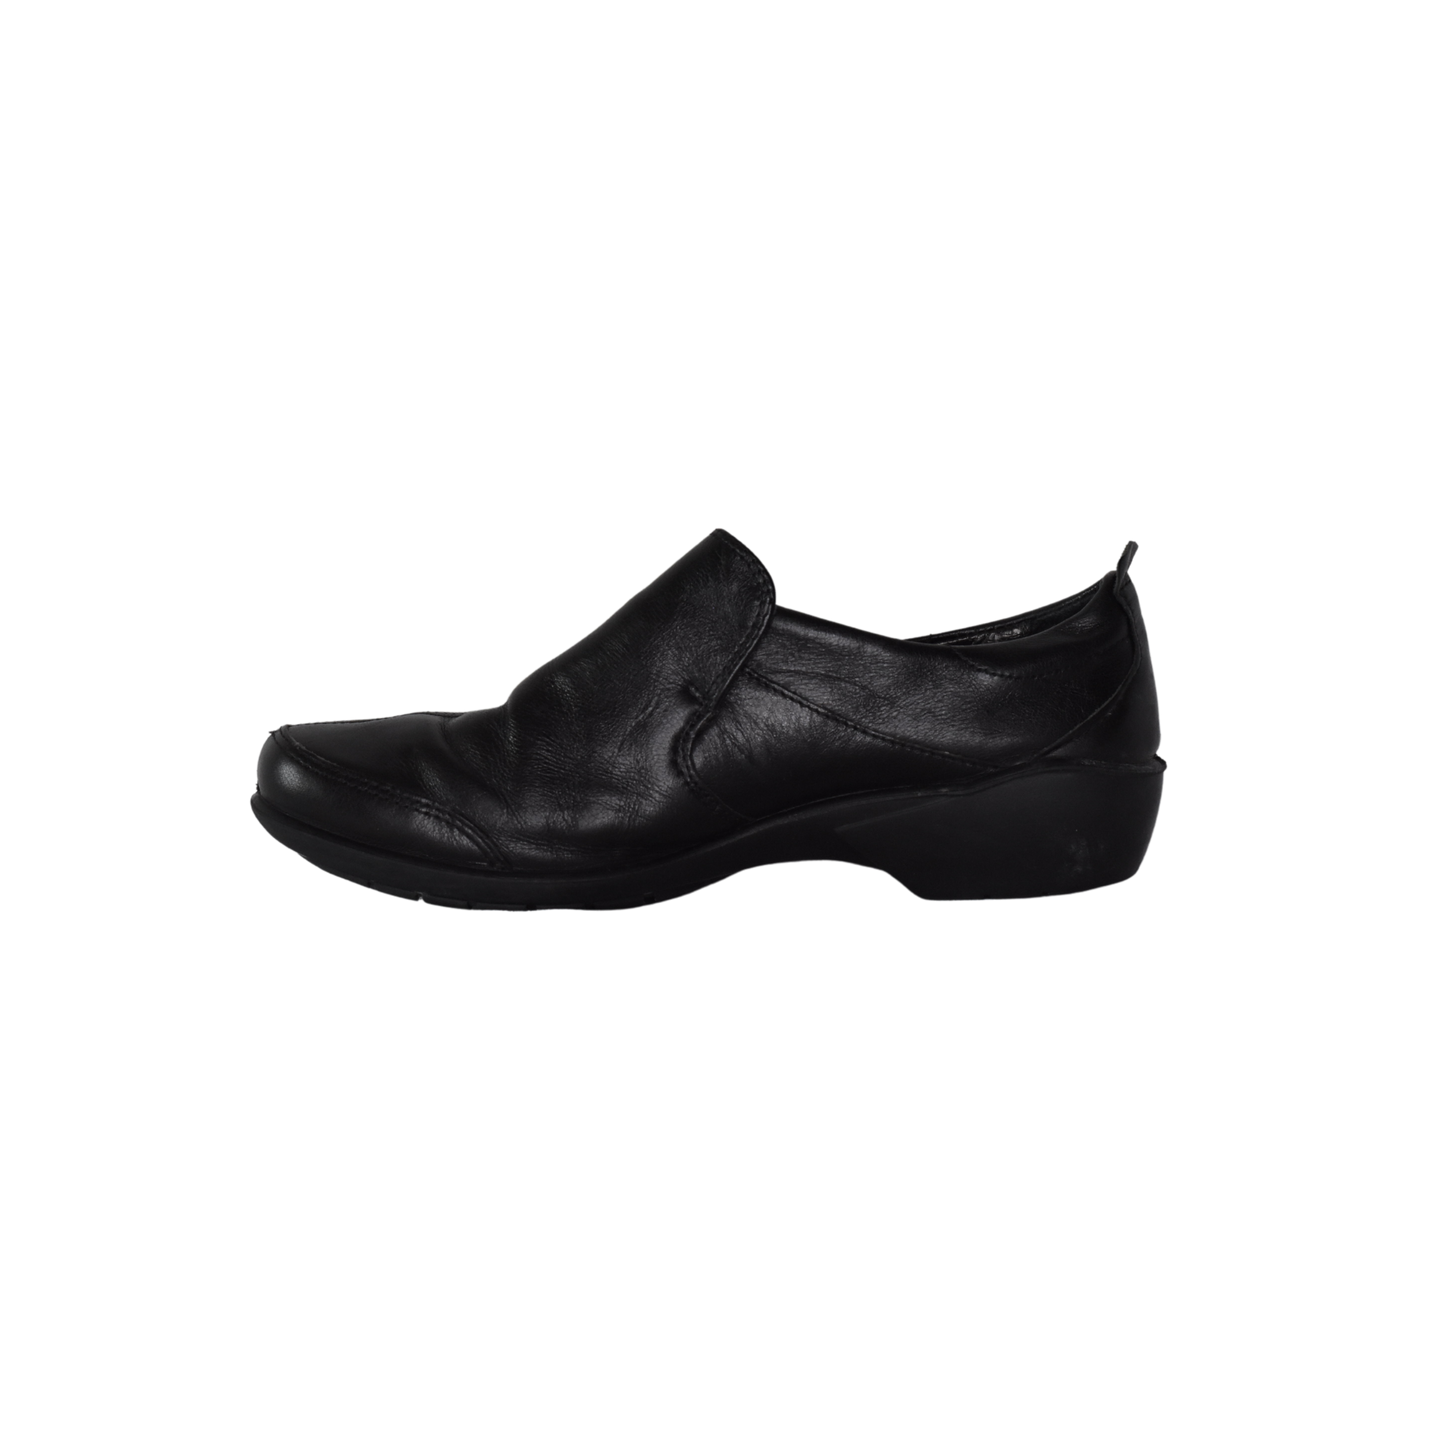 Romika Shoe Black Size 37 SKU 000252-3